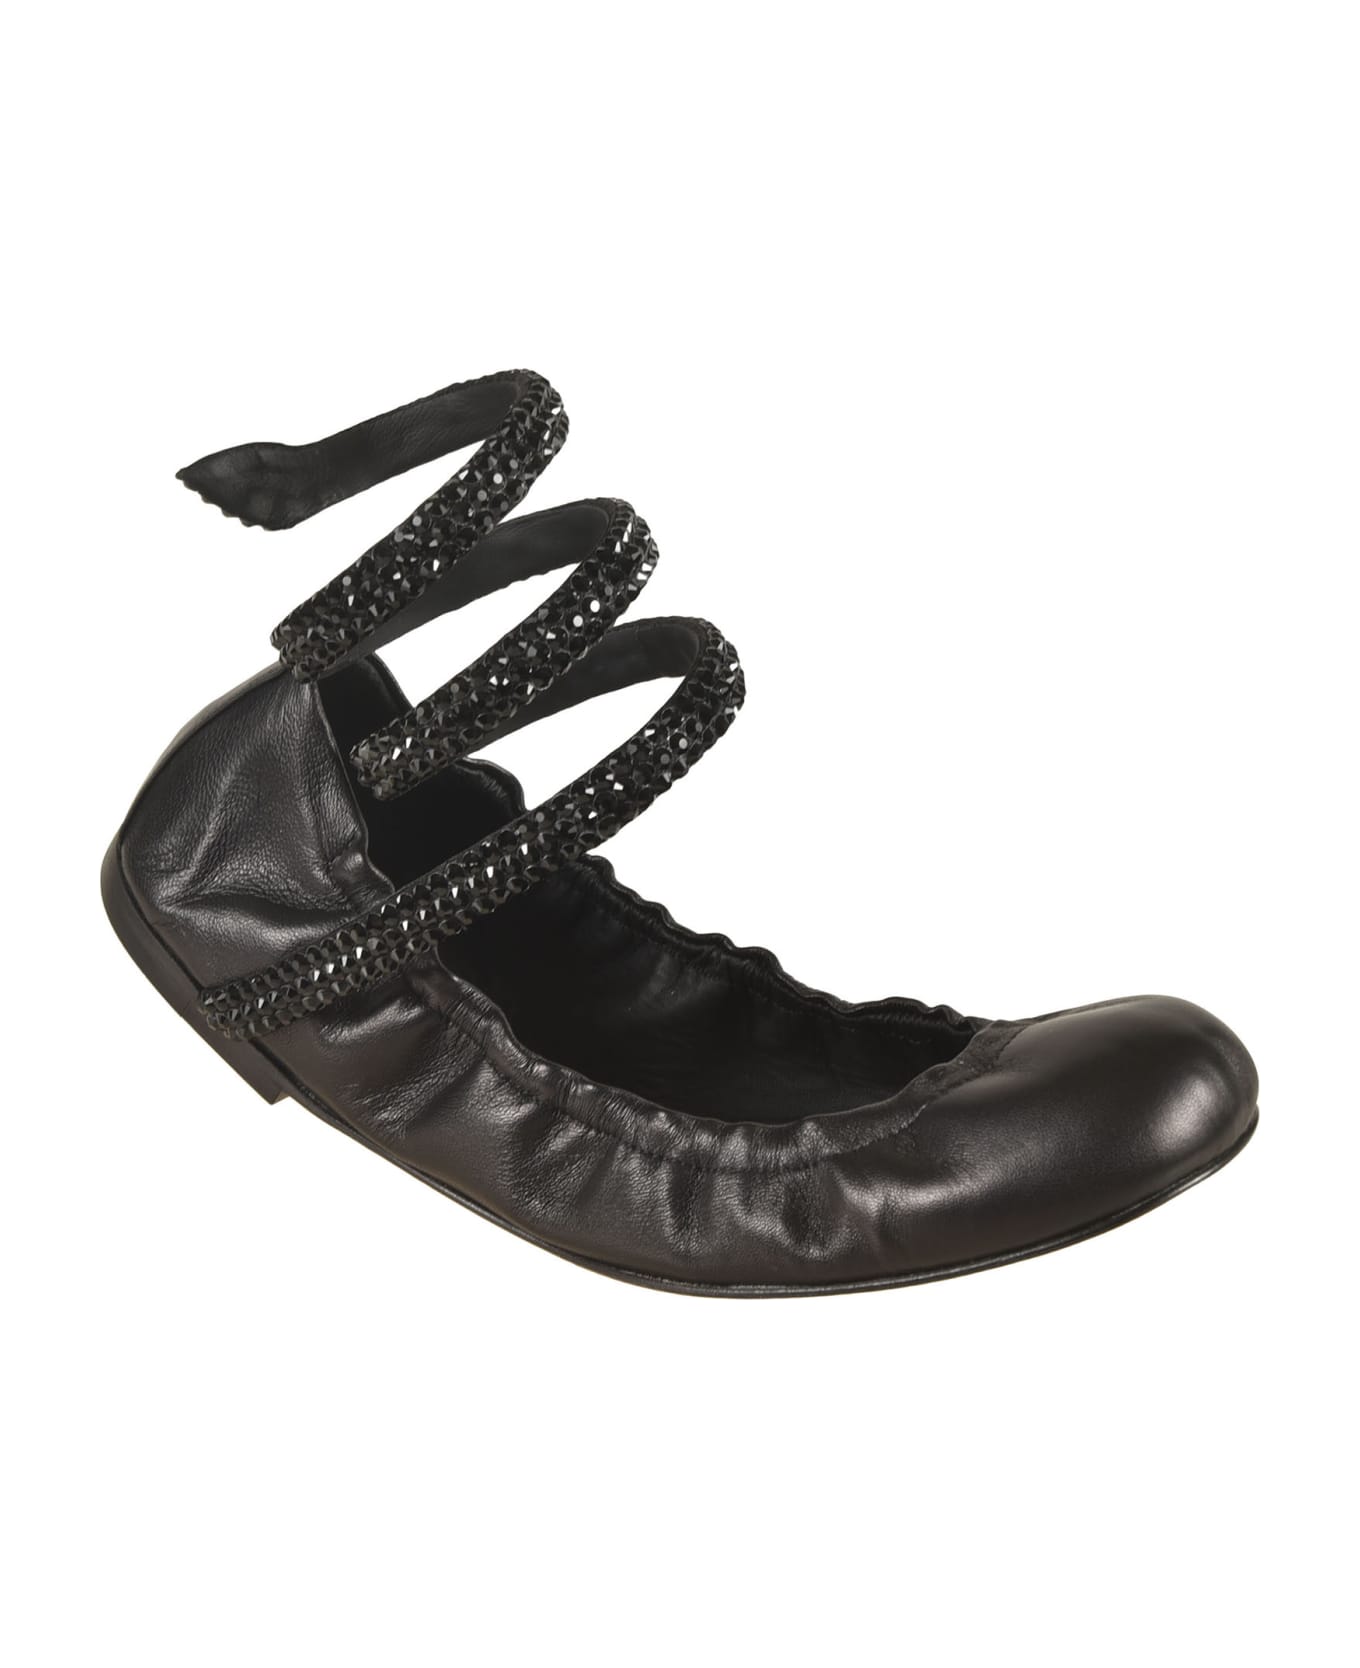 René Caovilla Studded Ankle Strap Ballerinas - Black